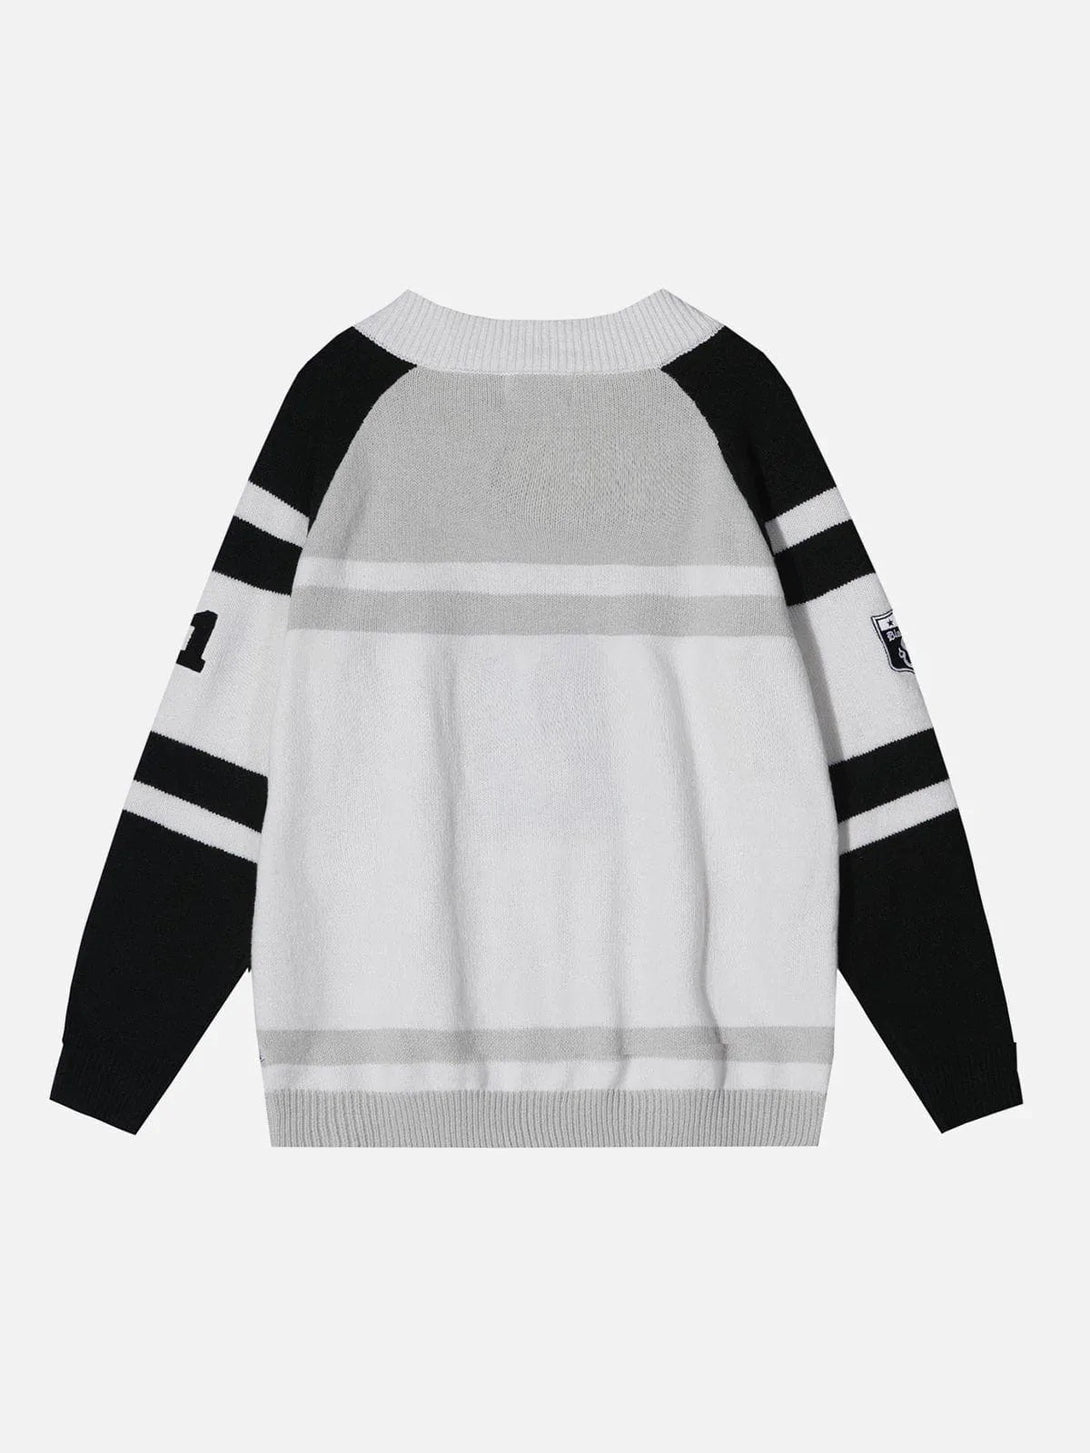 Majesda® - Vintage V-neck Sweater outfit ideas streetwear fashion